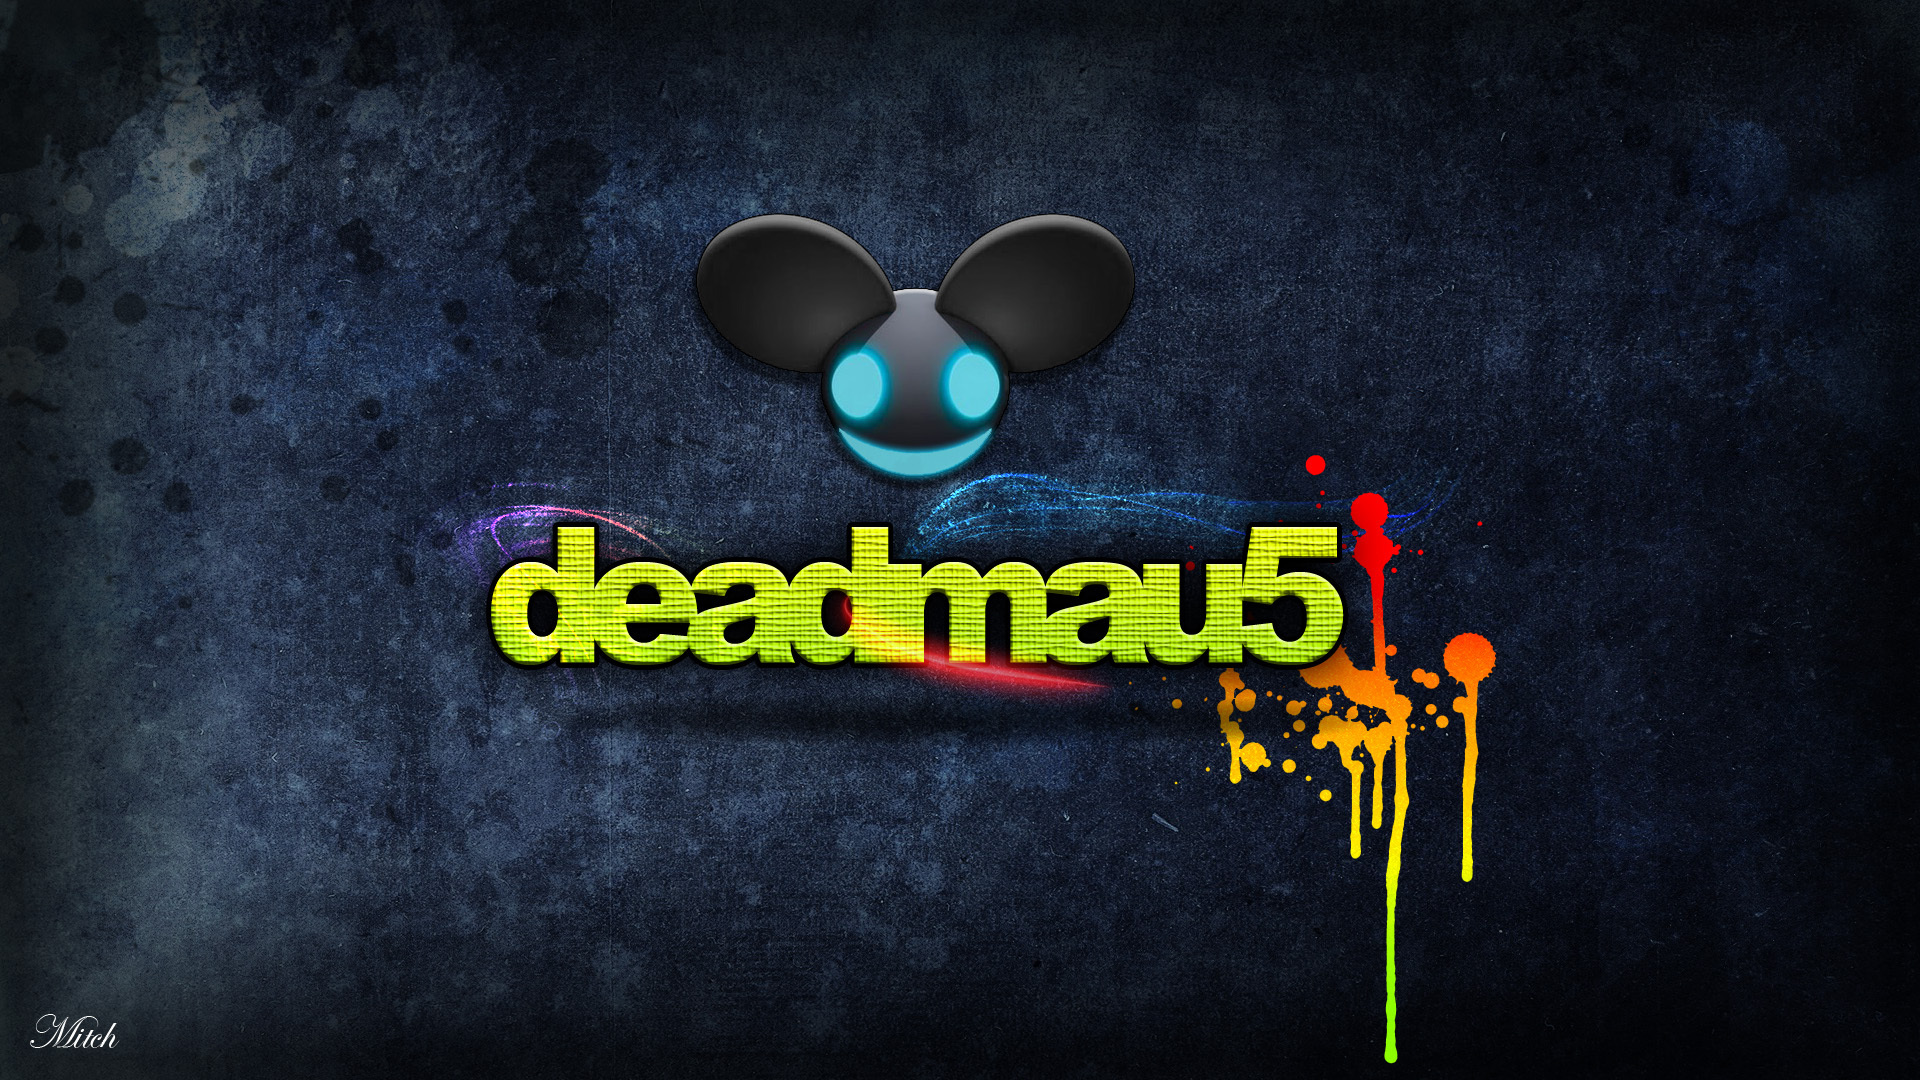 Dead Mouse Dj Wallpaper Deadmau5